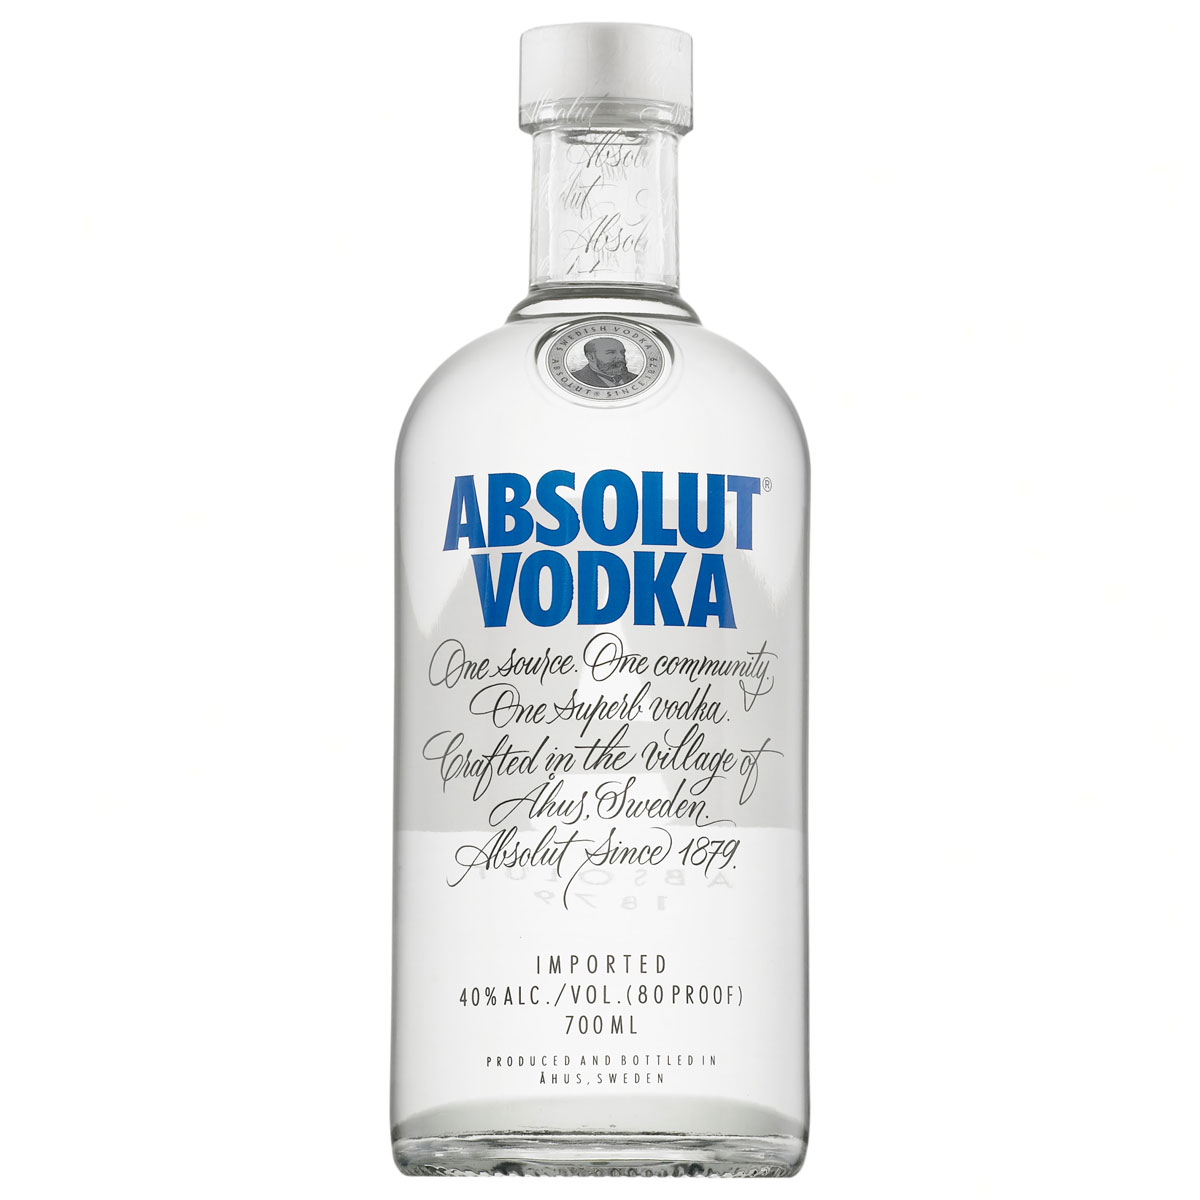 a bottle of absolut vodka